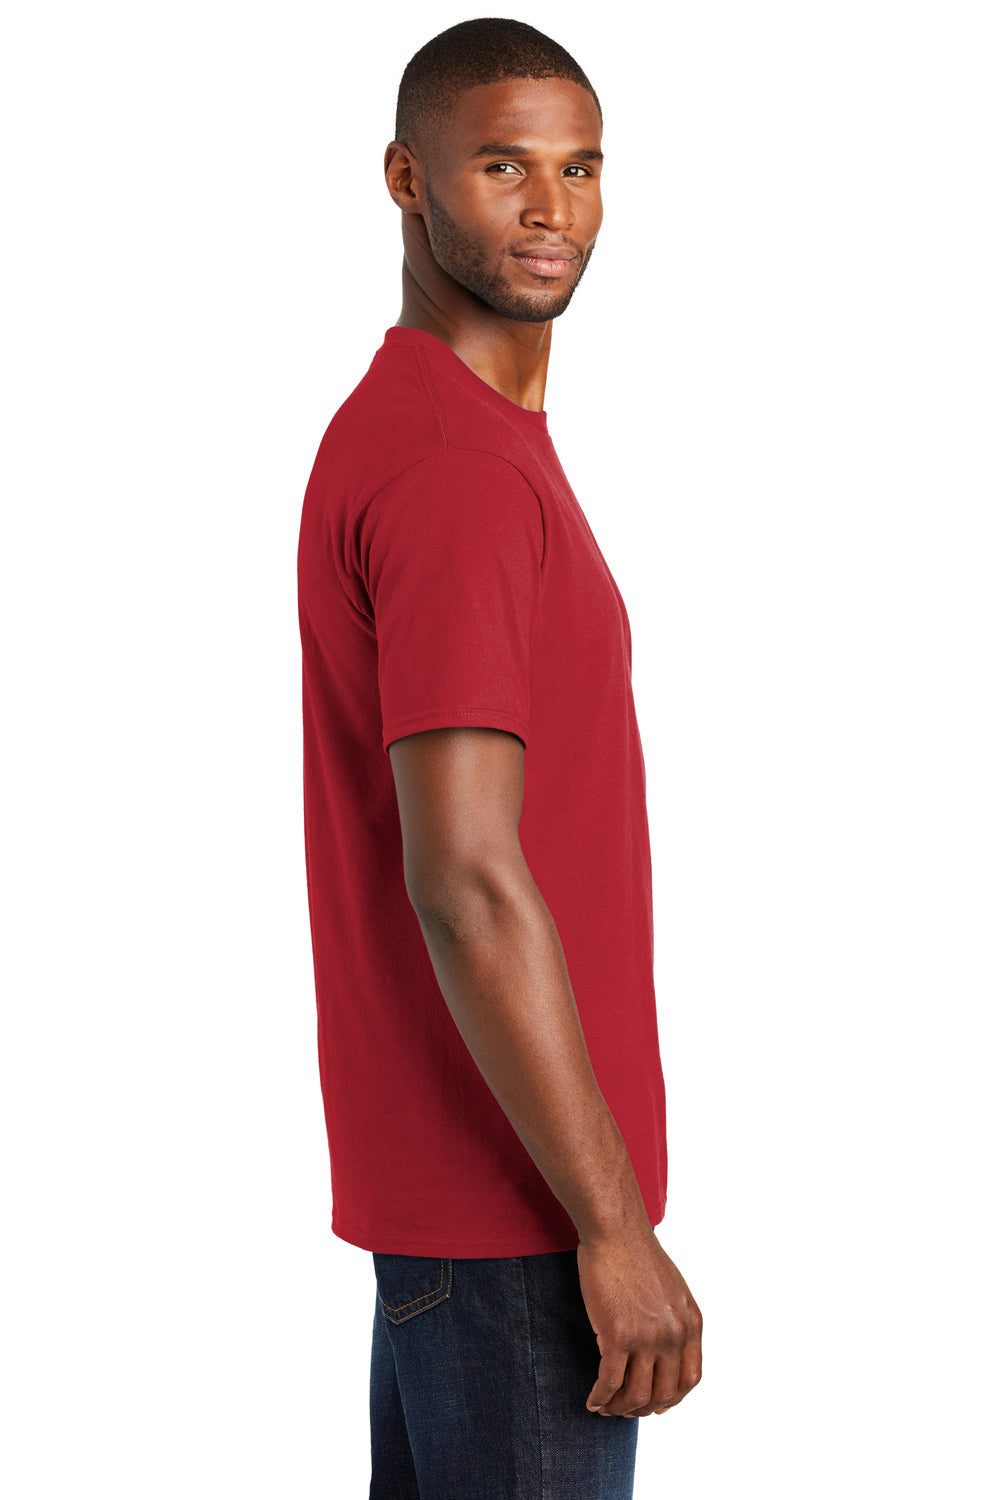 Port & Company PC450 Mens Fan Favorite Short Sleeve Crewneck T-Shirt Team Cardinal Red Side